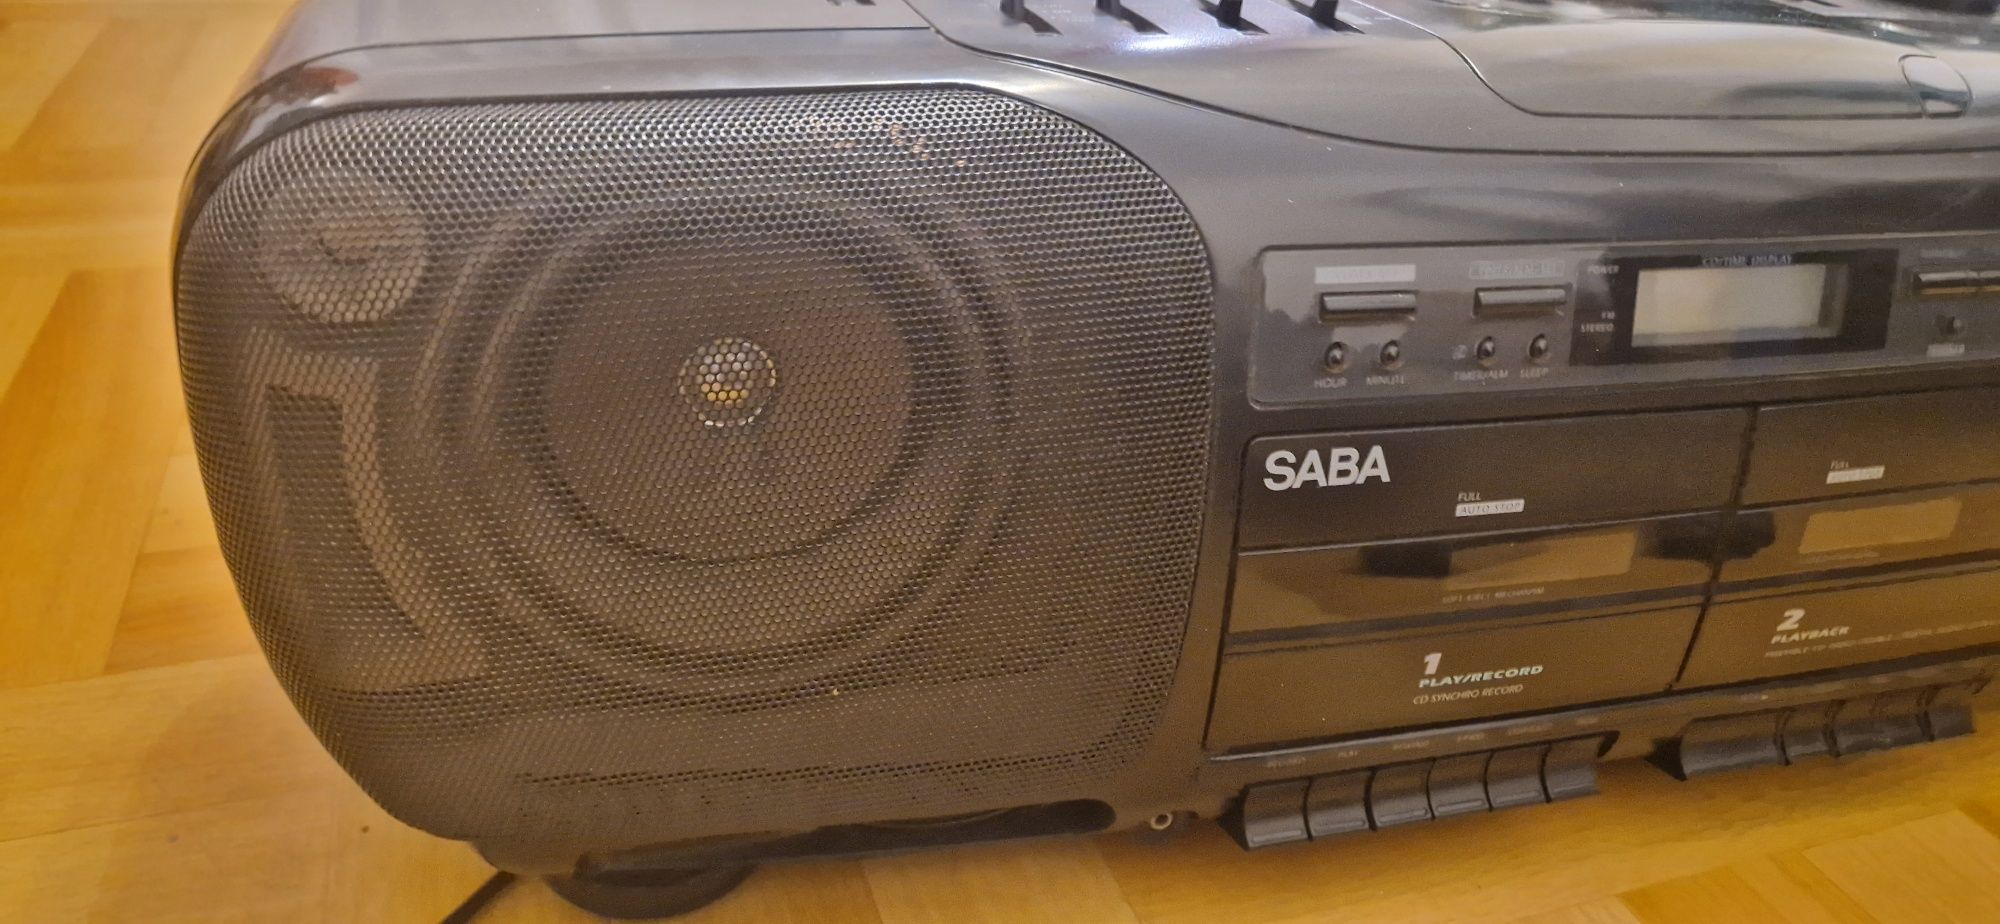 Przenośny radiomagnetofon z cd Saba jamnik boombox